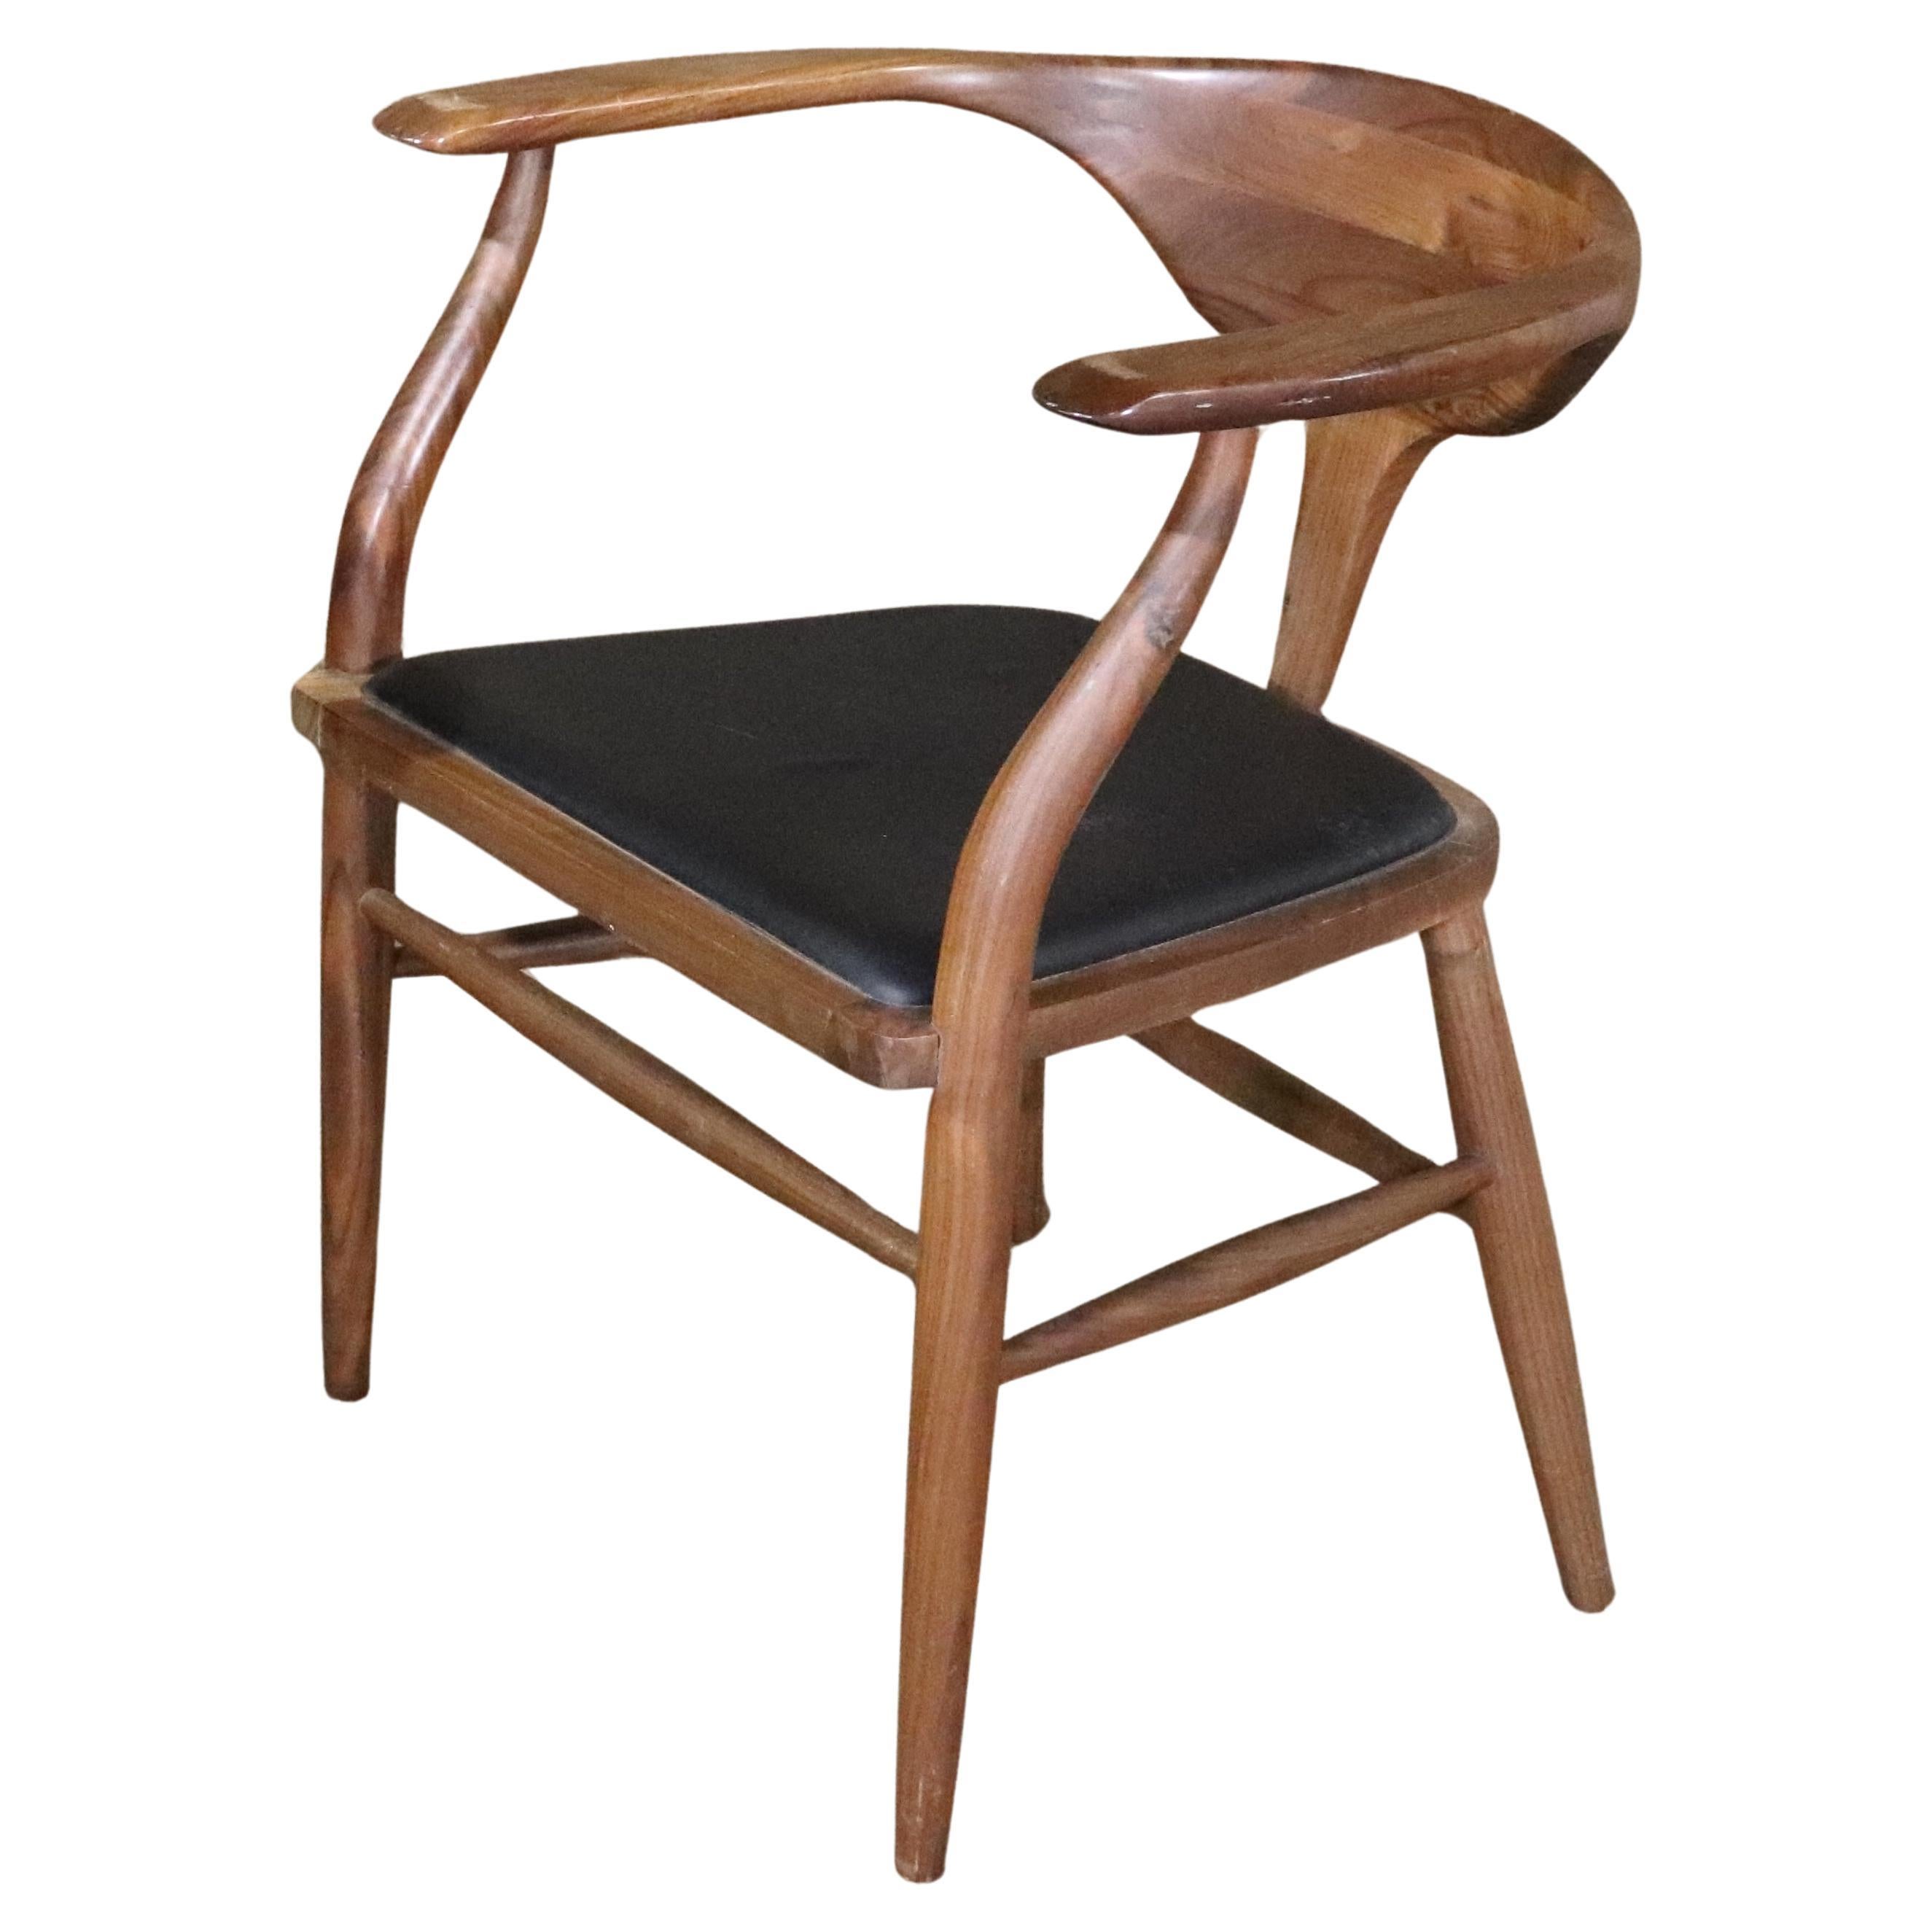 Modern 'Cow Horn' Style Chair